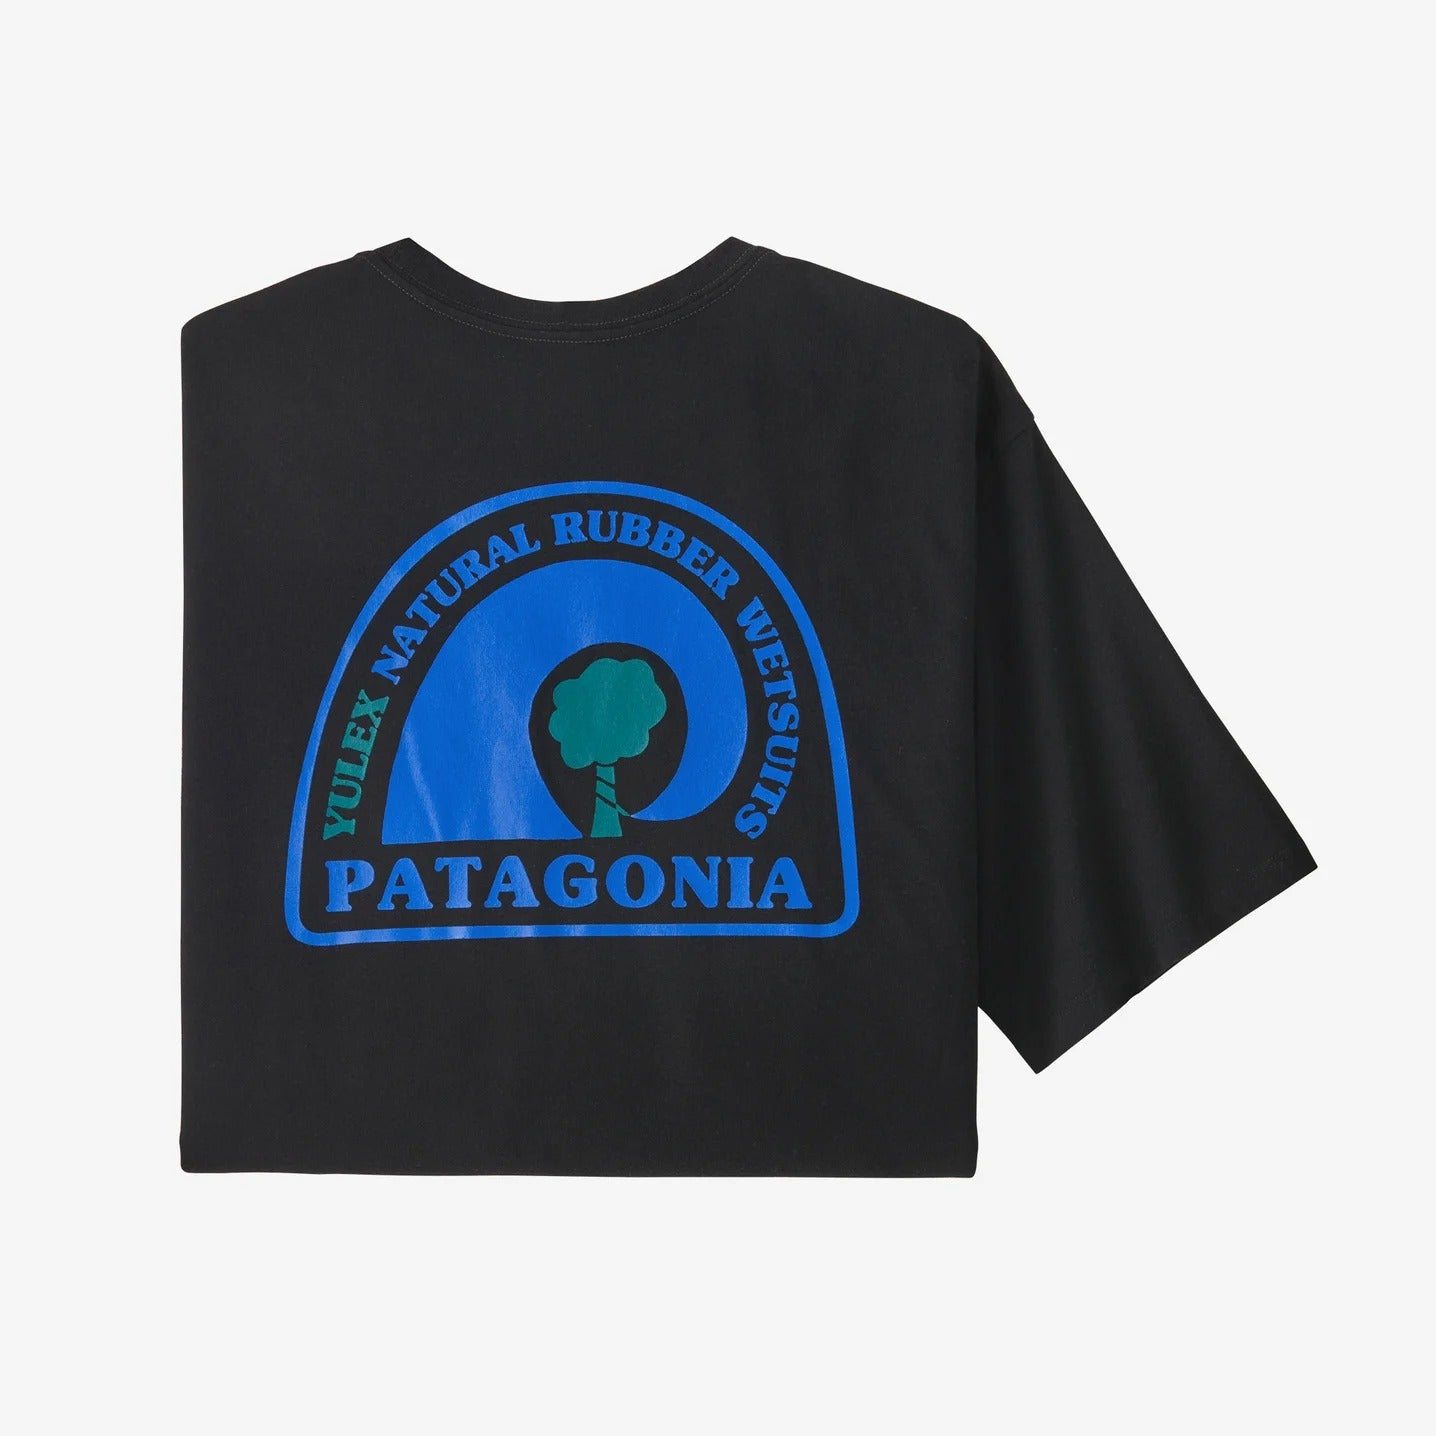 Image of Patagonia Mens Shirt Rubber Tree Mark Responsibili-Tee